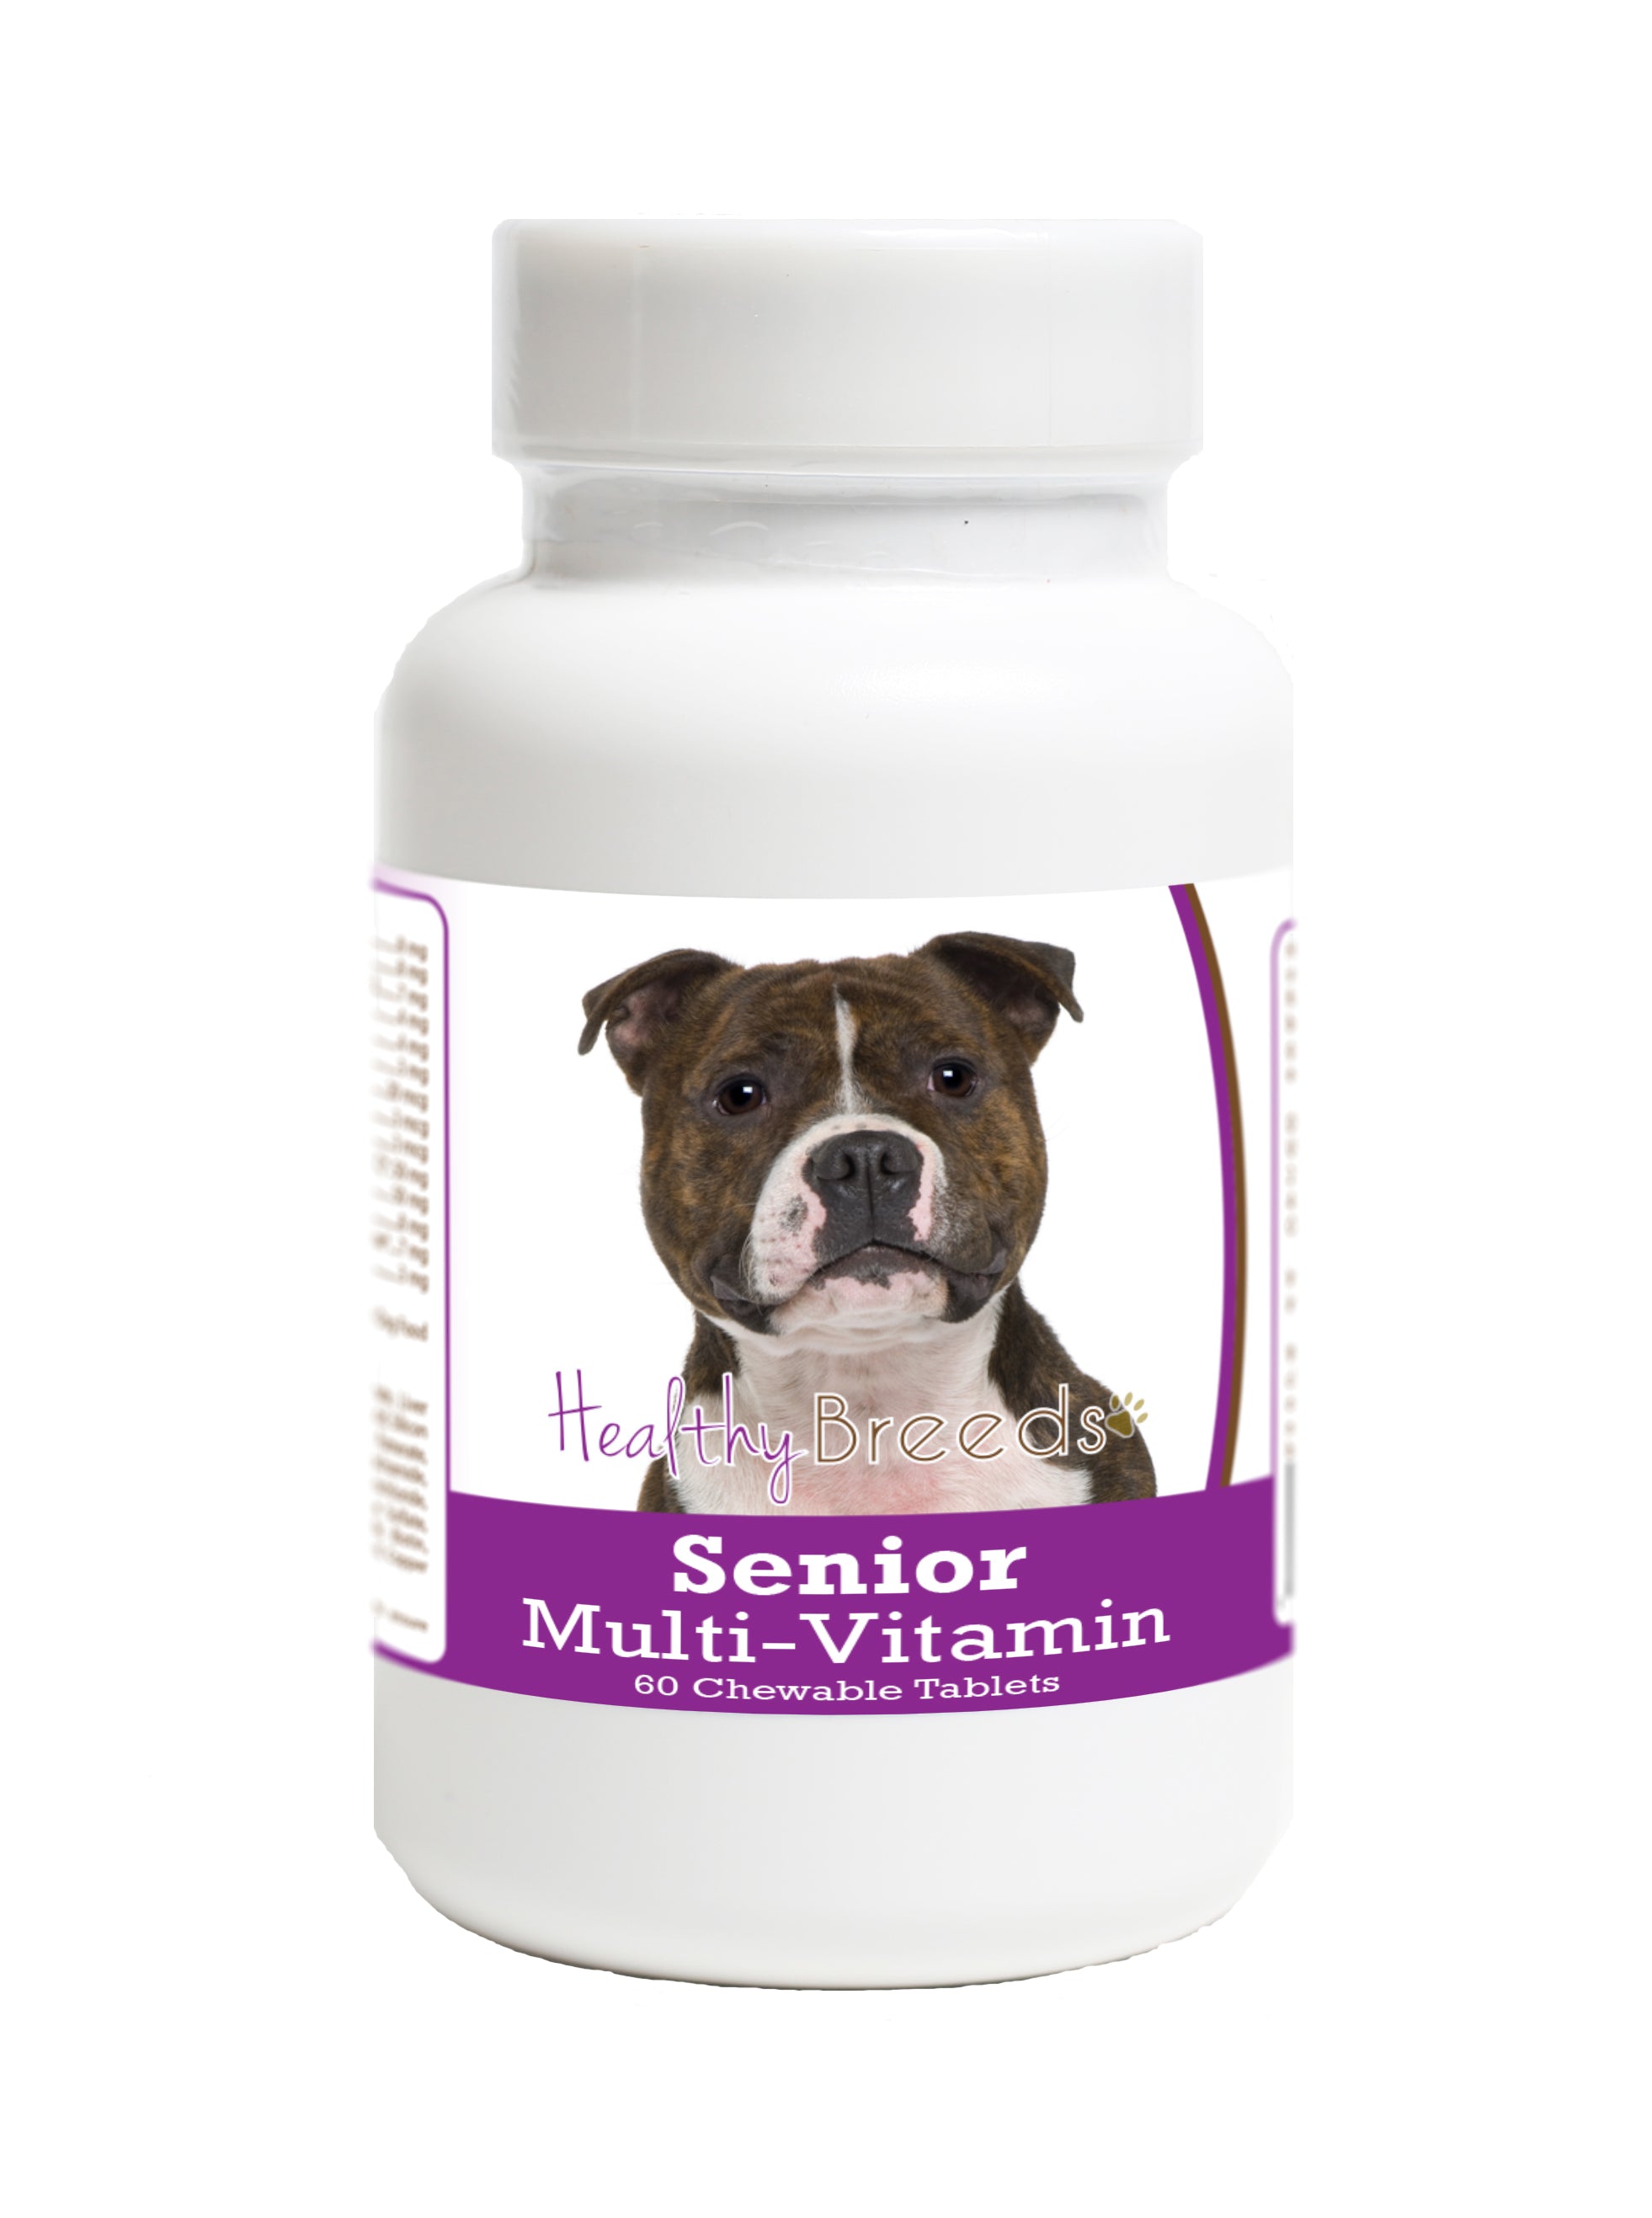 Staffordshire Bull Terrier Senior Dog Multivitamin Tablets 60 Count